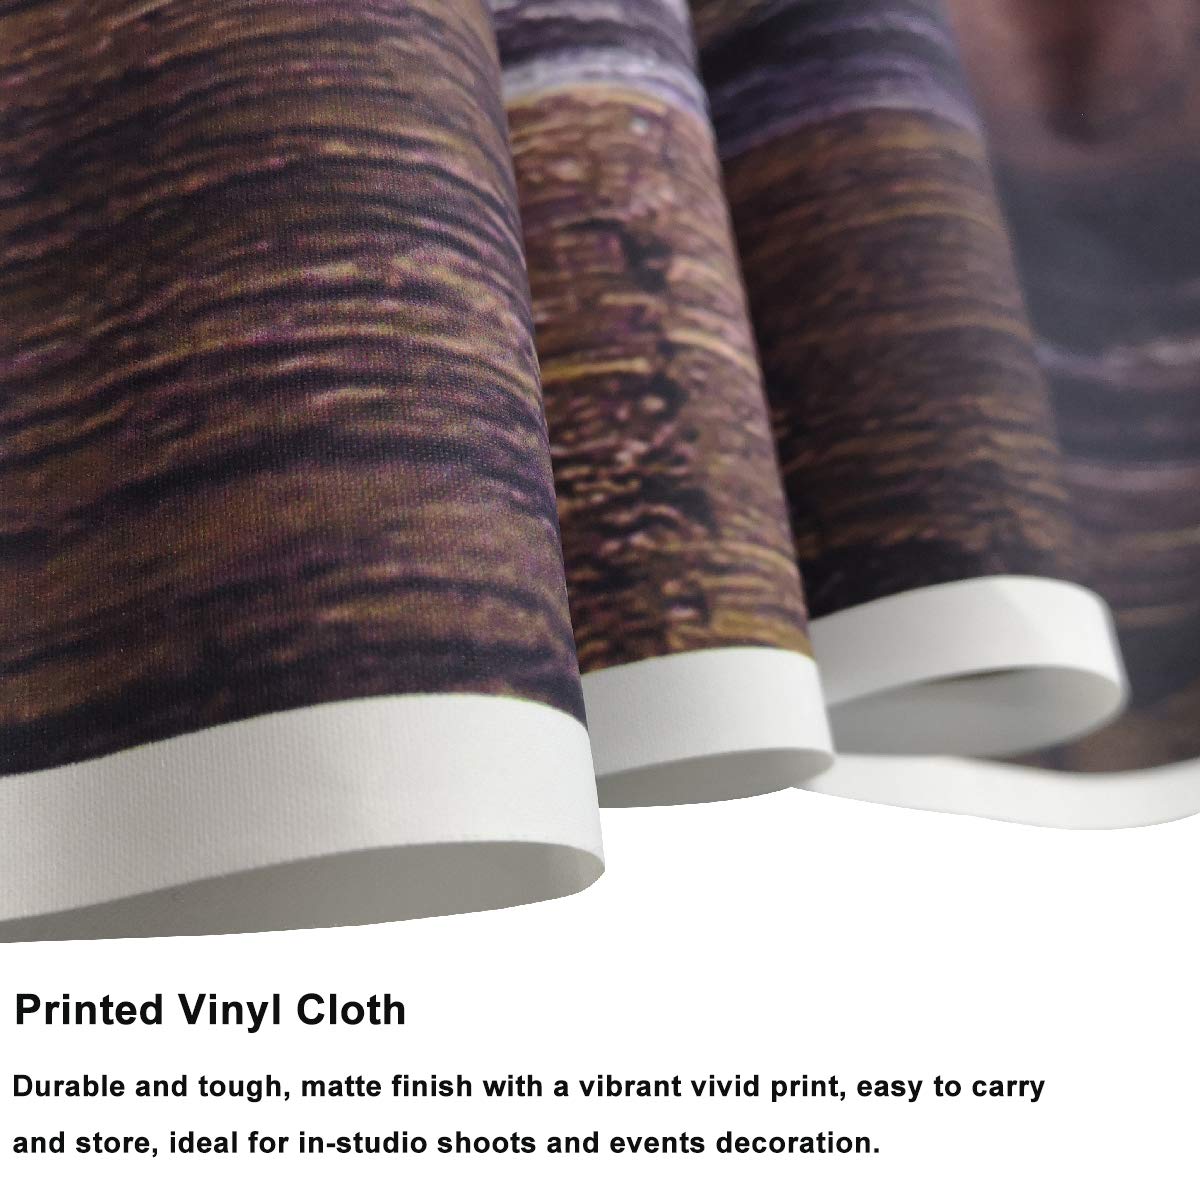 Printed vinyl cloth